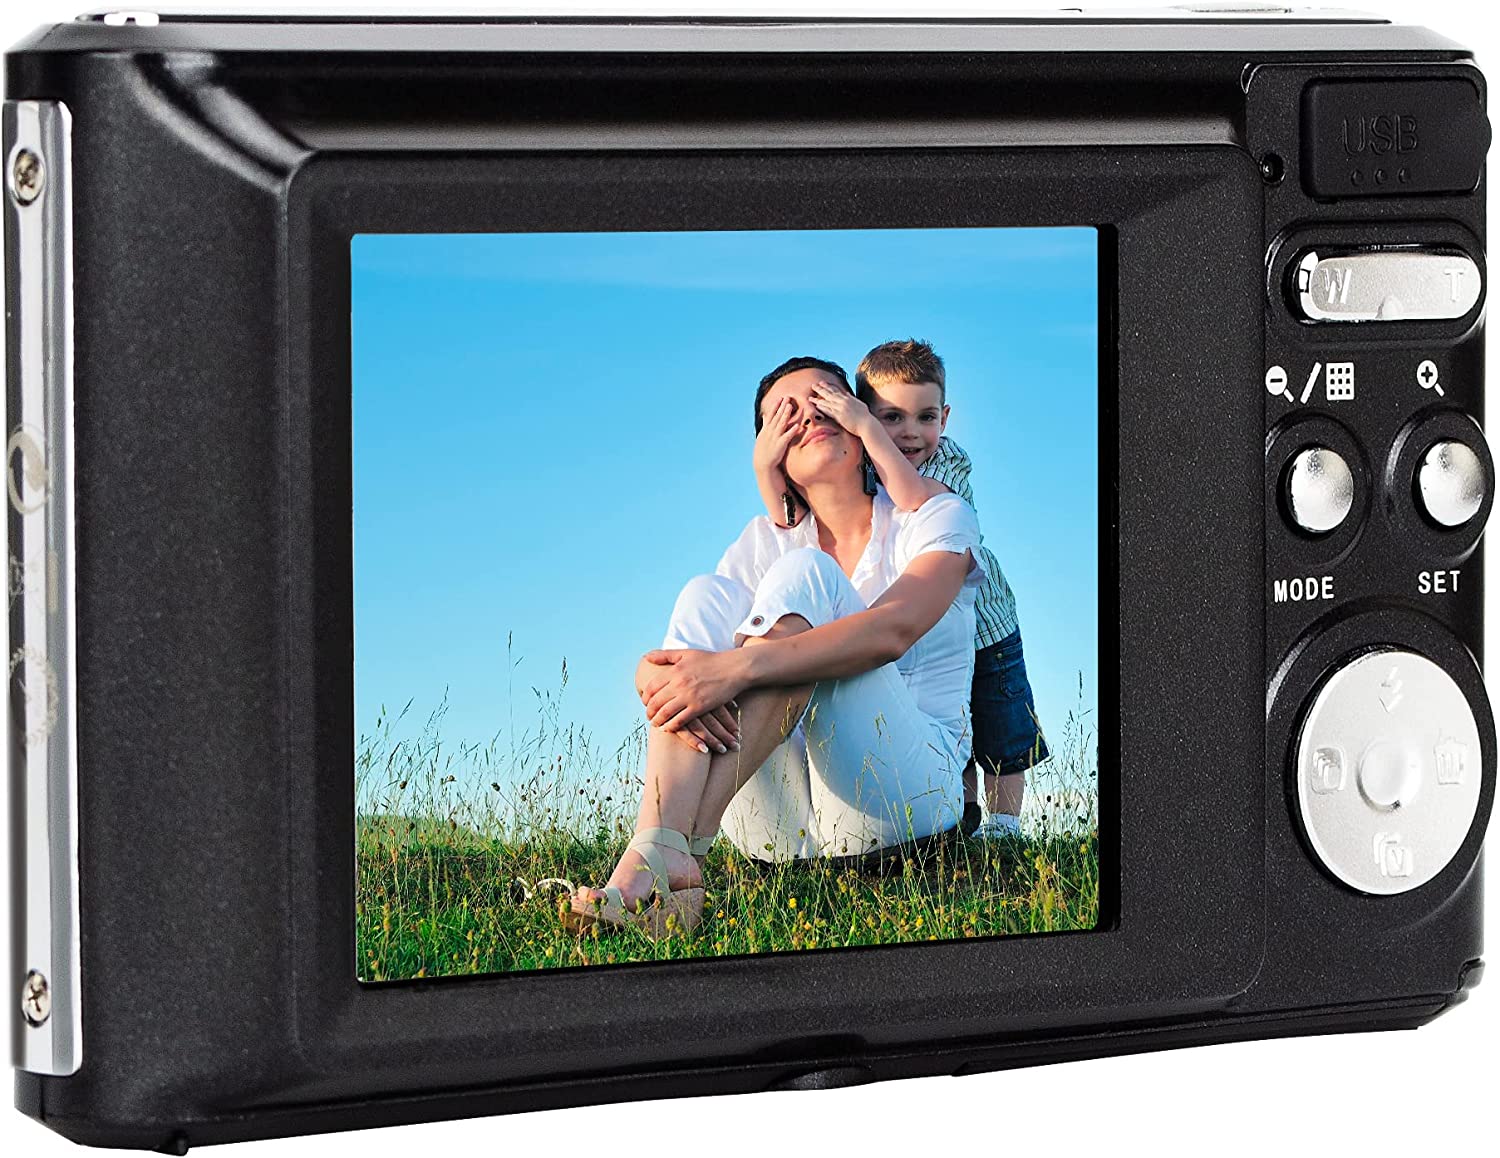 Agfa Photo Realishot DC5500 Compact Digital Camera - Black